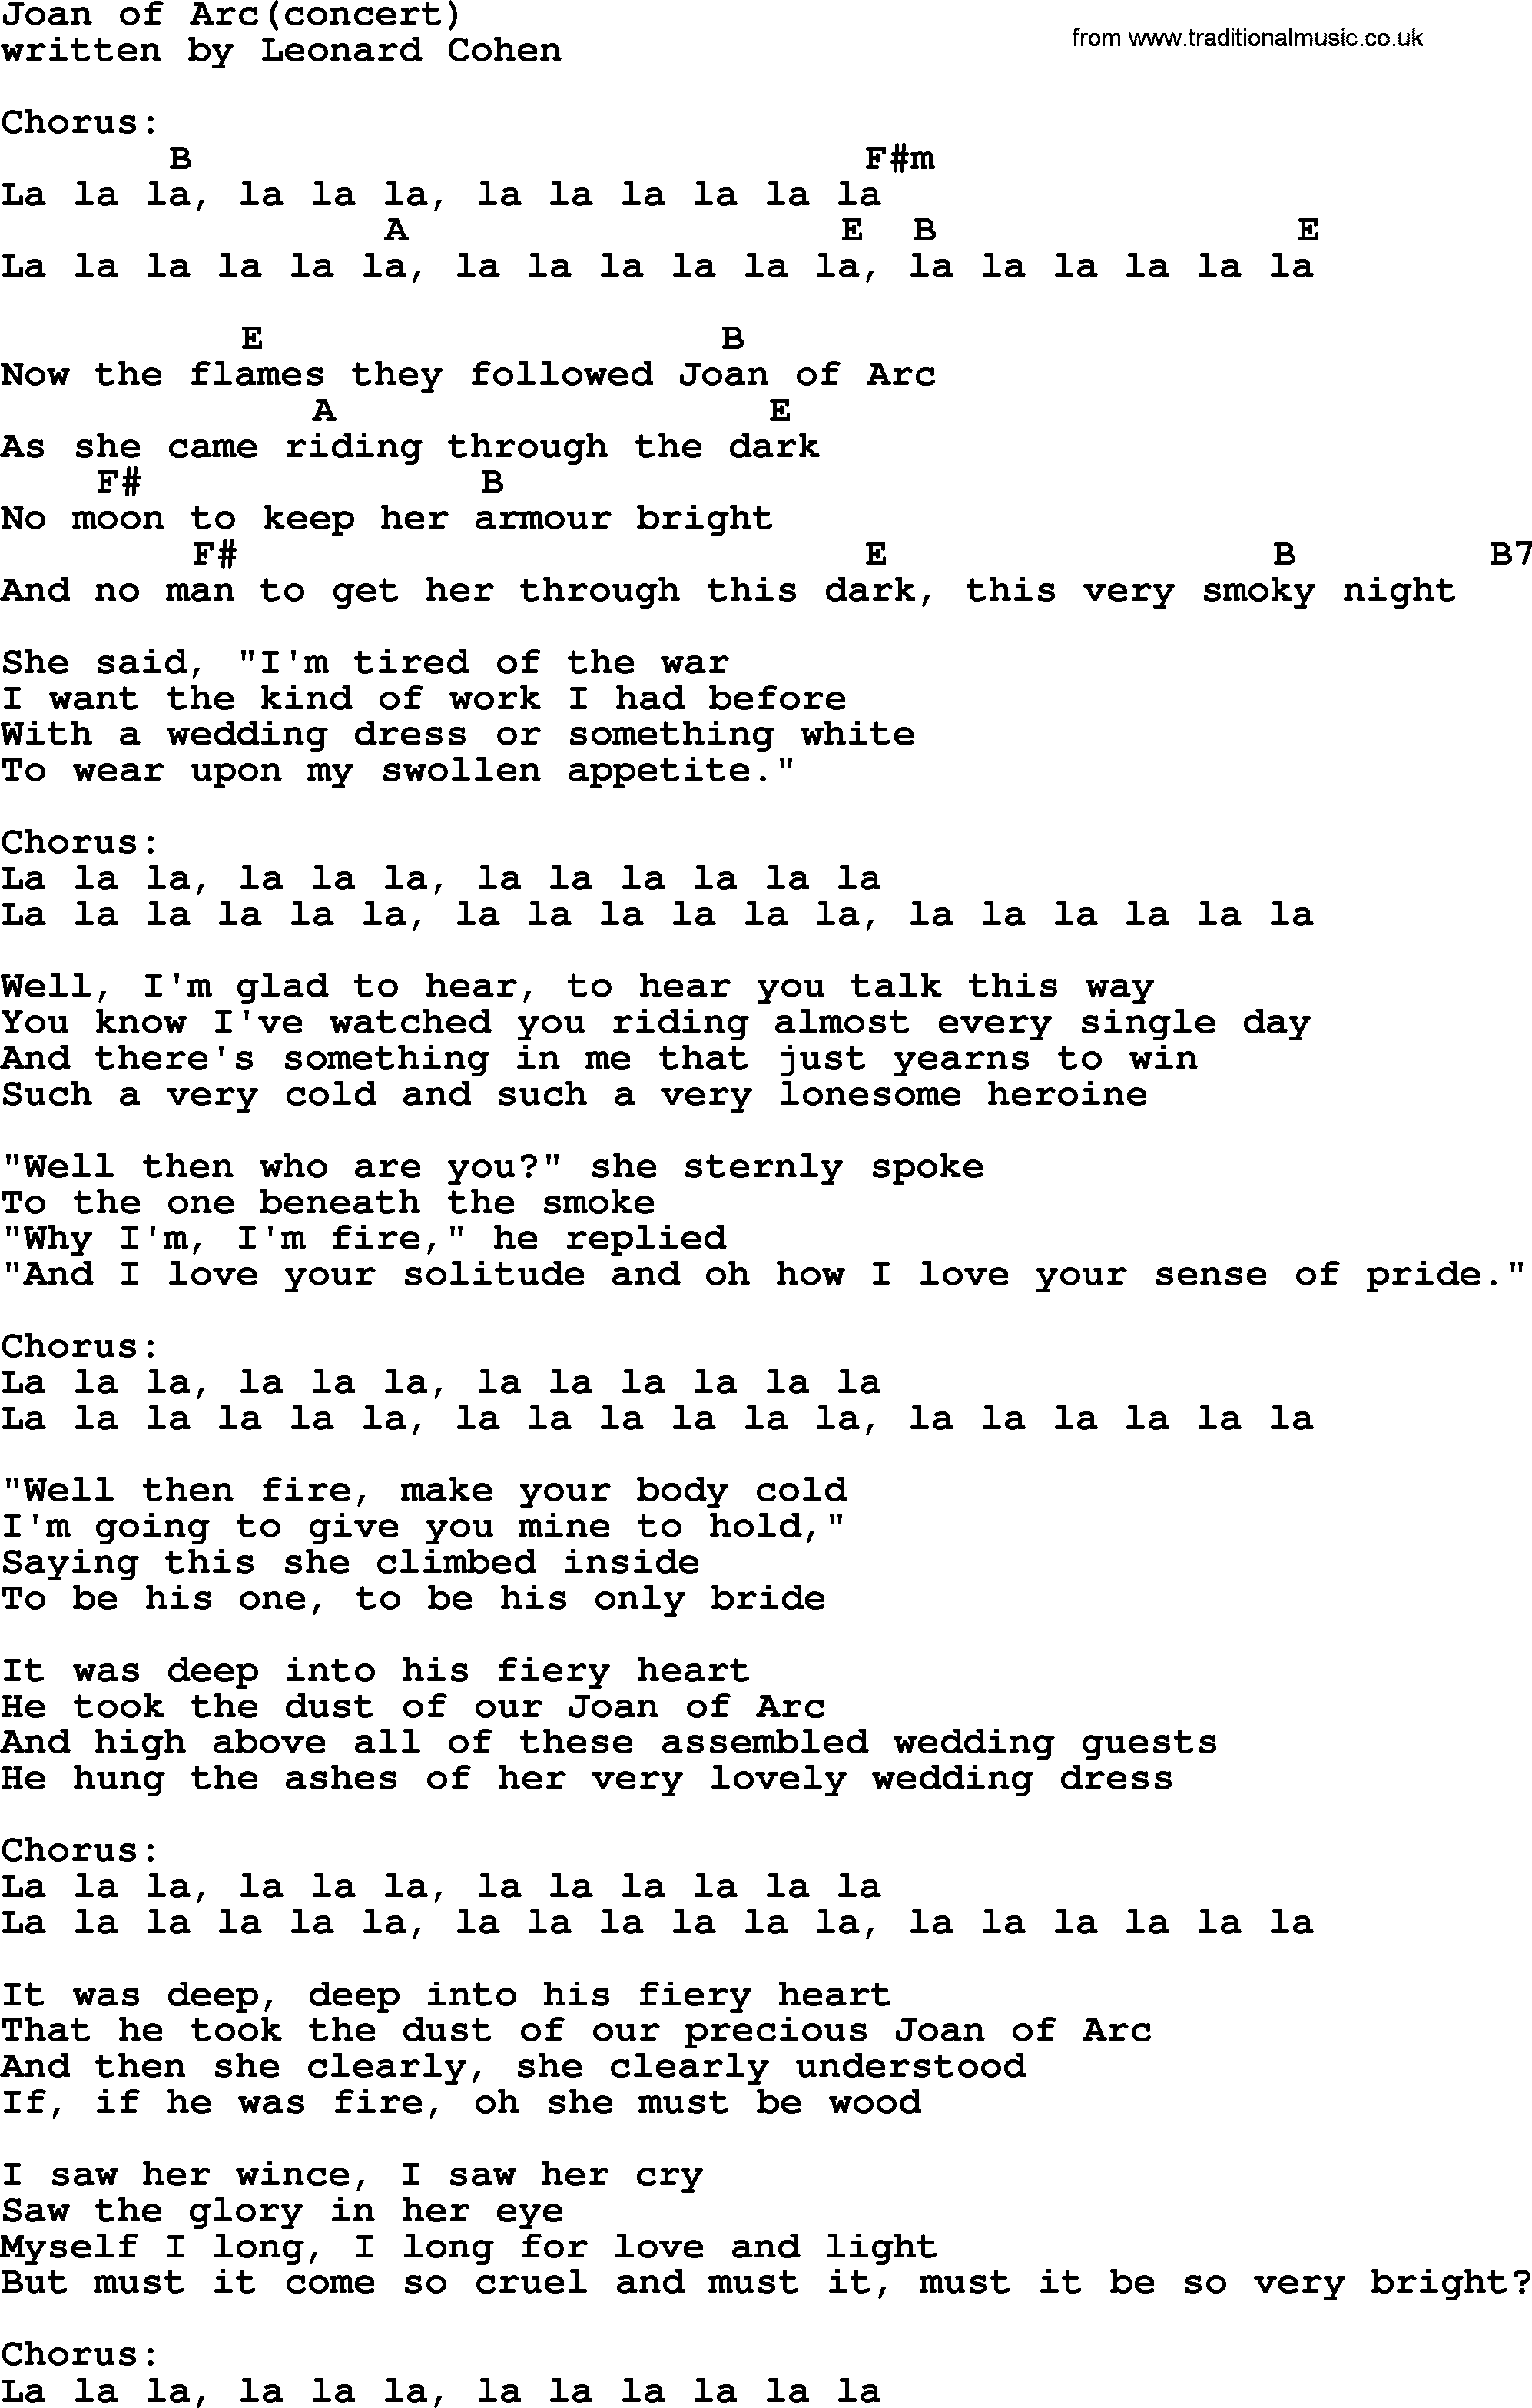 Leonard Cohen song Joan Of Arc(concert), lyrics and chords